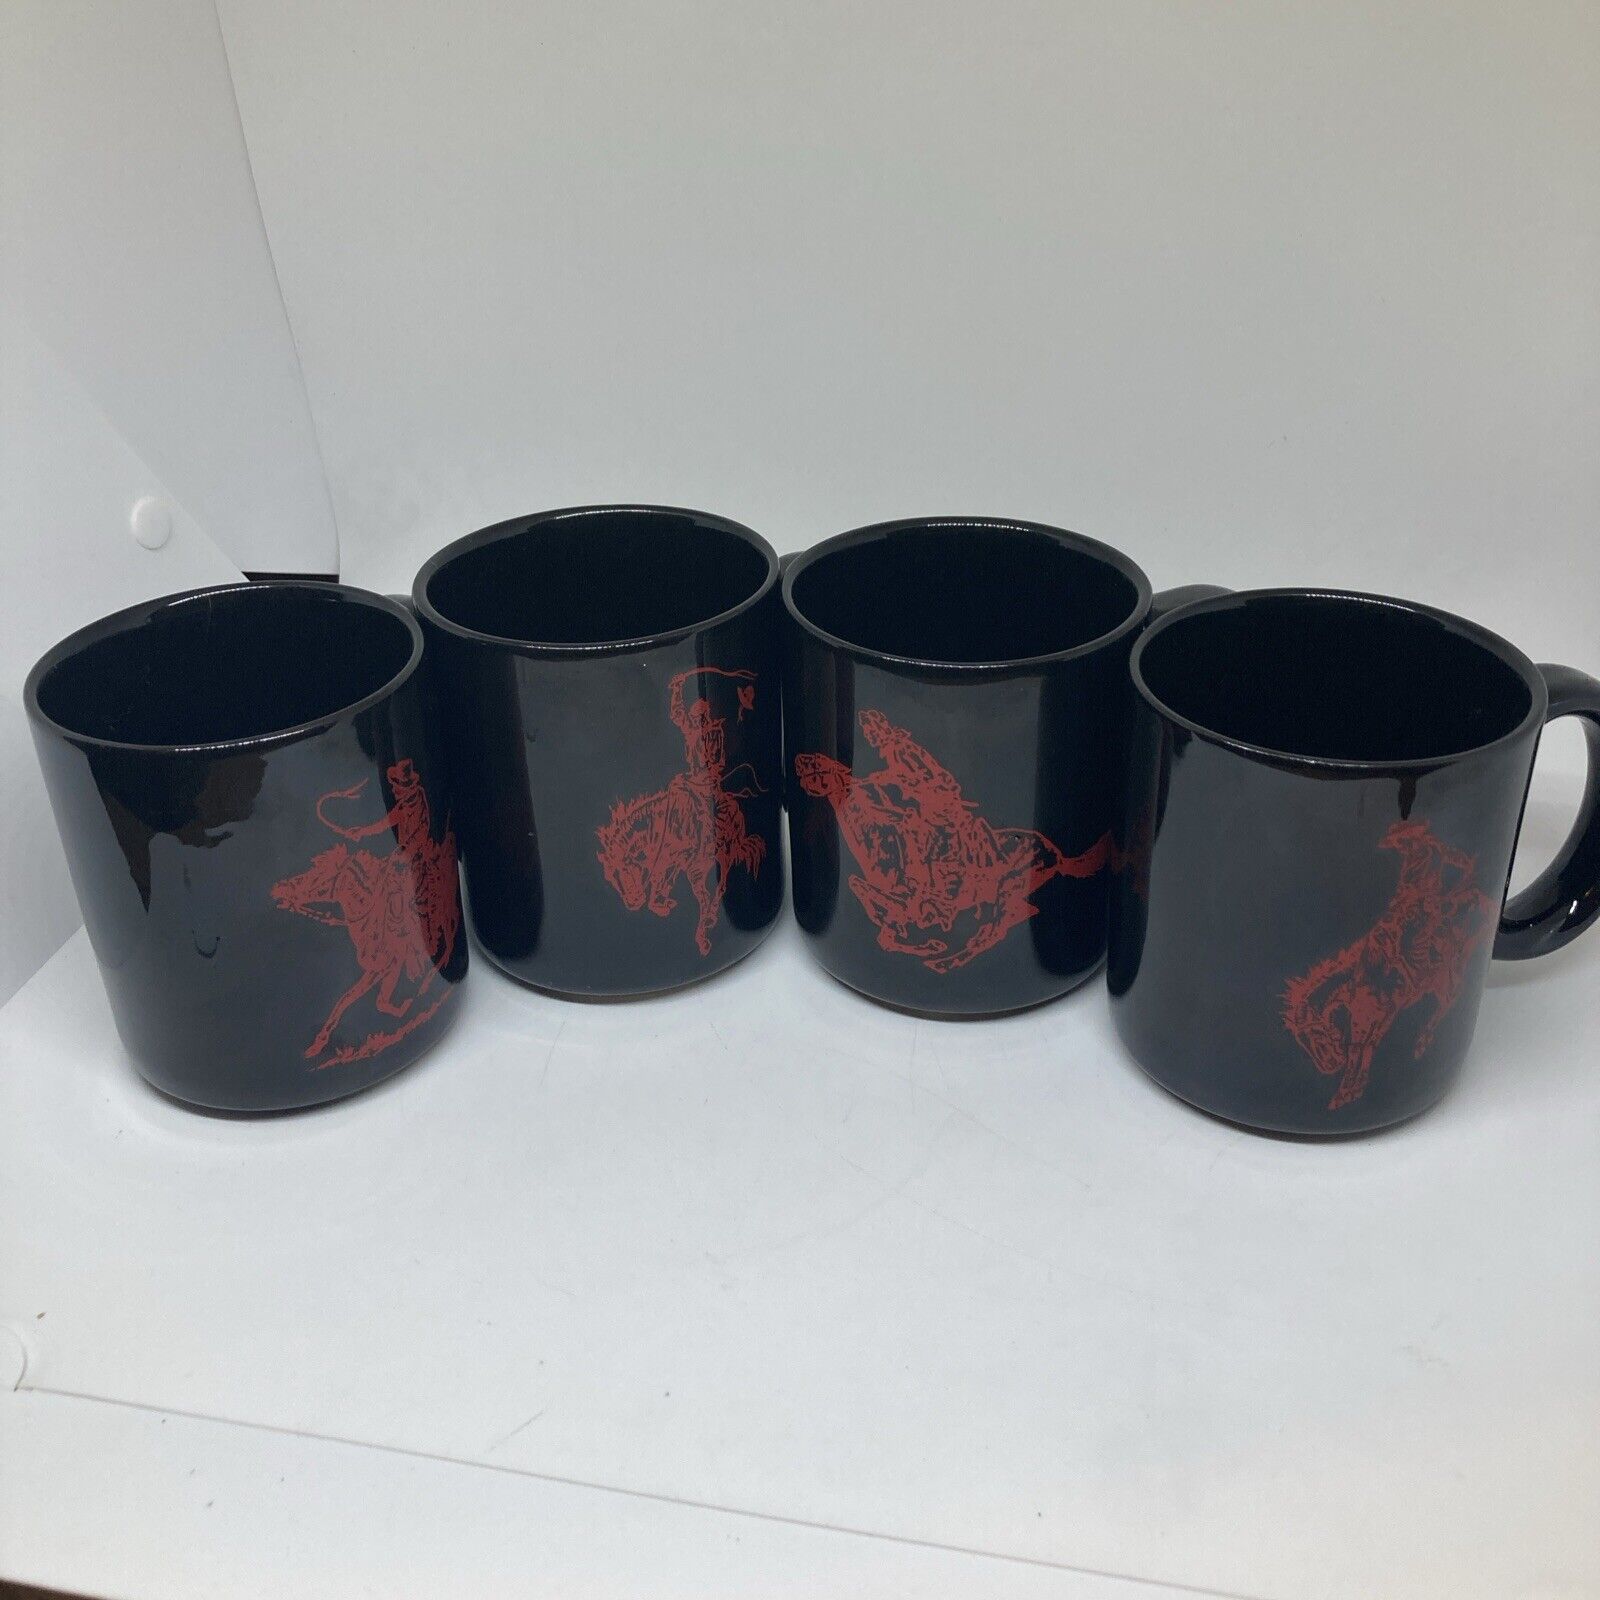 4 Vintage Marlboro Coffee Cups Mugs Black Red Cowboy Horse, Pony Express Rider